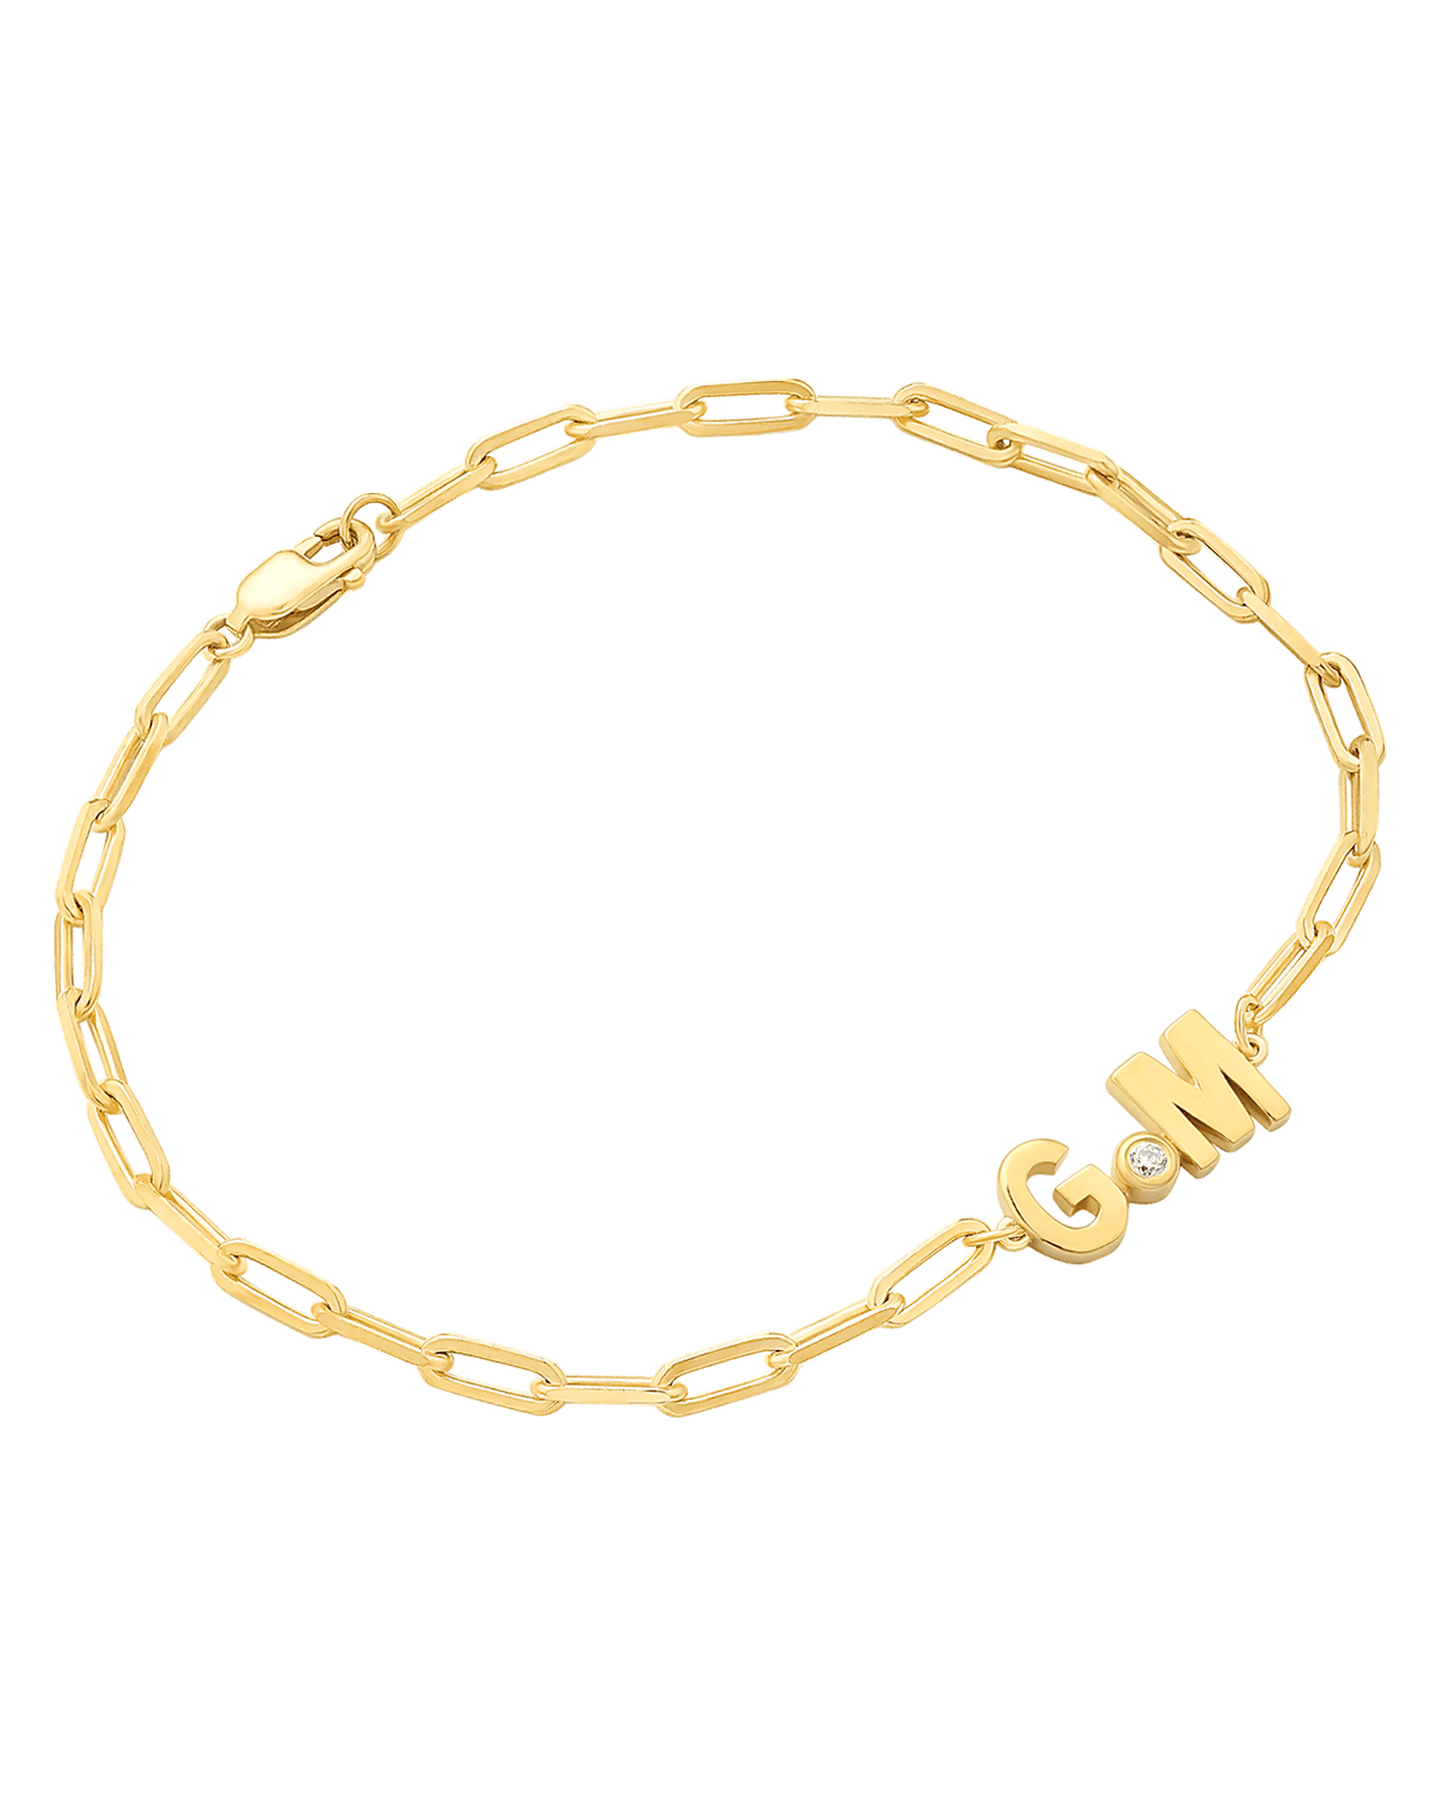 2 Initials Diamond Bracelet - 14K Yellow Gold Bracelets magal-dev 6" 